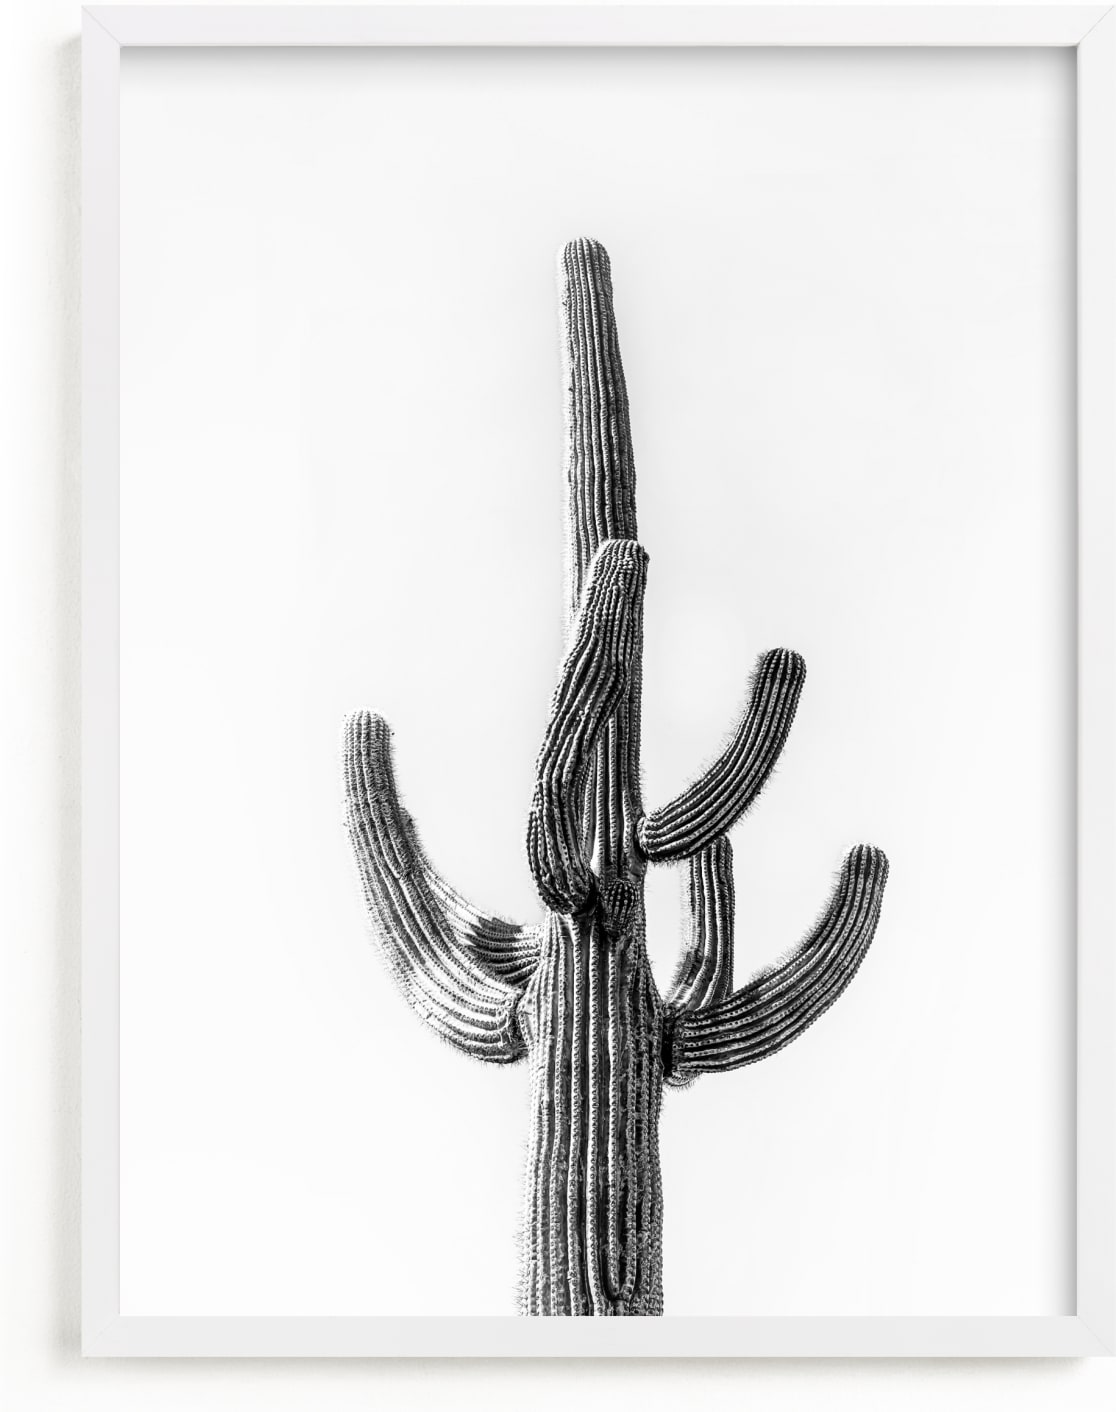 This is a white art by Ellen Schlegelmilch called Lone Cactus.